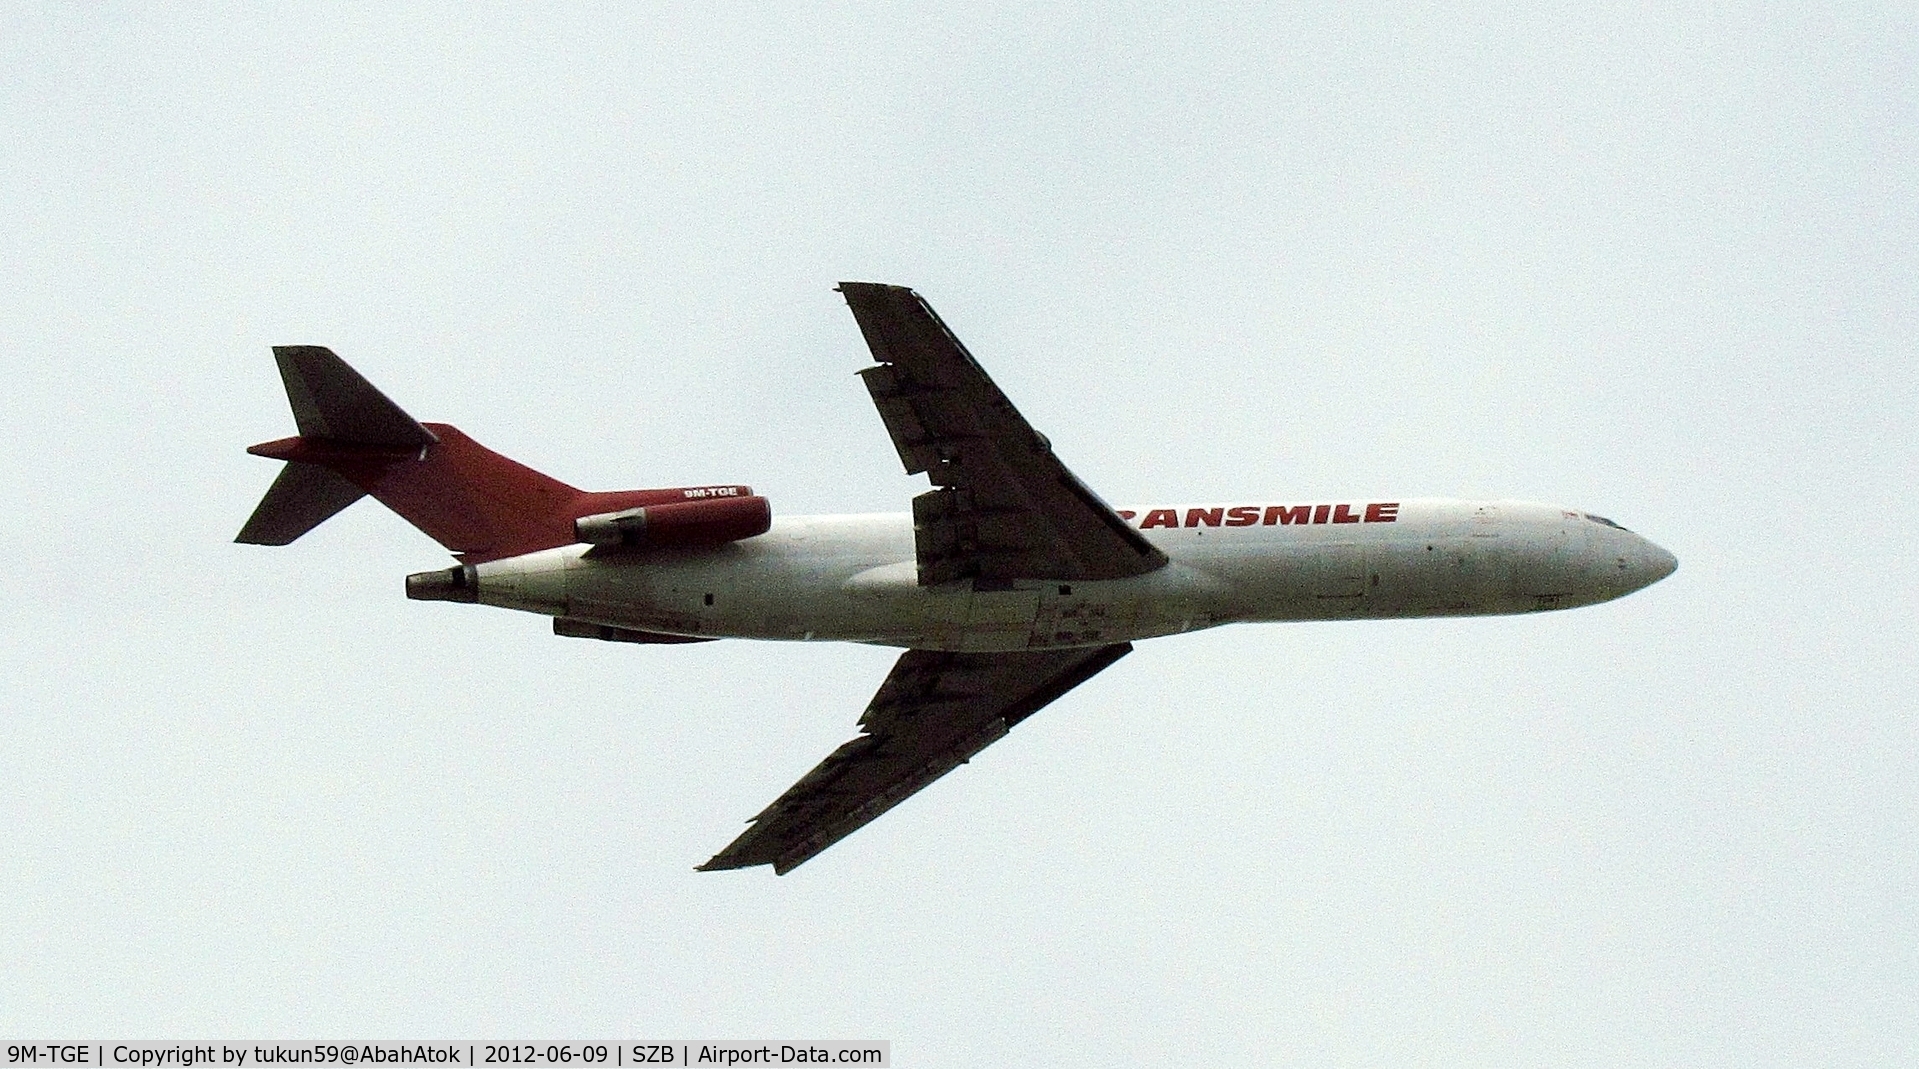 9M-TGE, 1979 Boeing 727-247F C/N 21697, Transmile Air Services